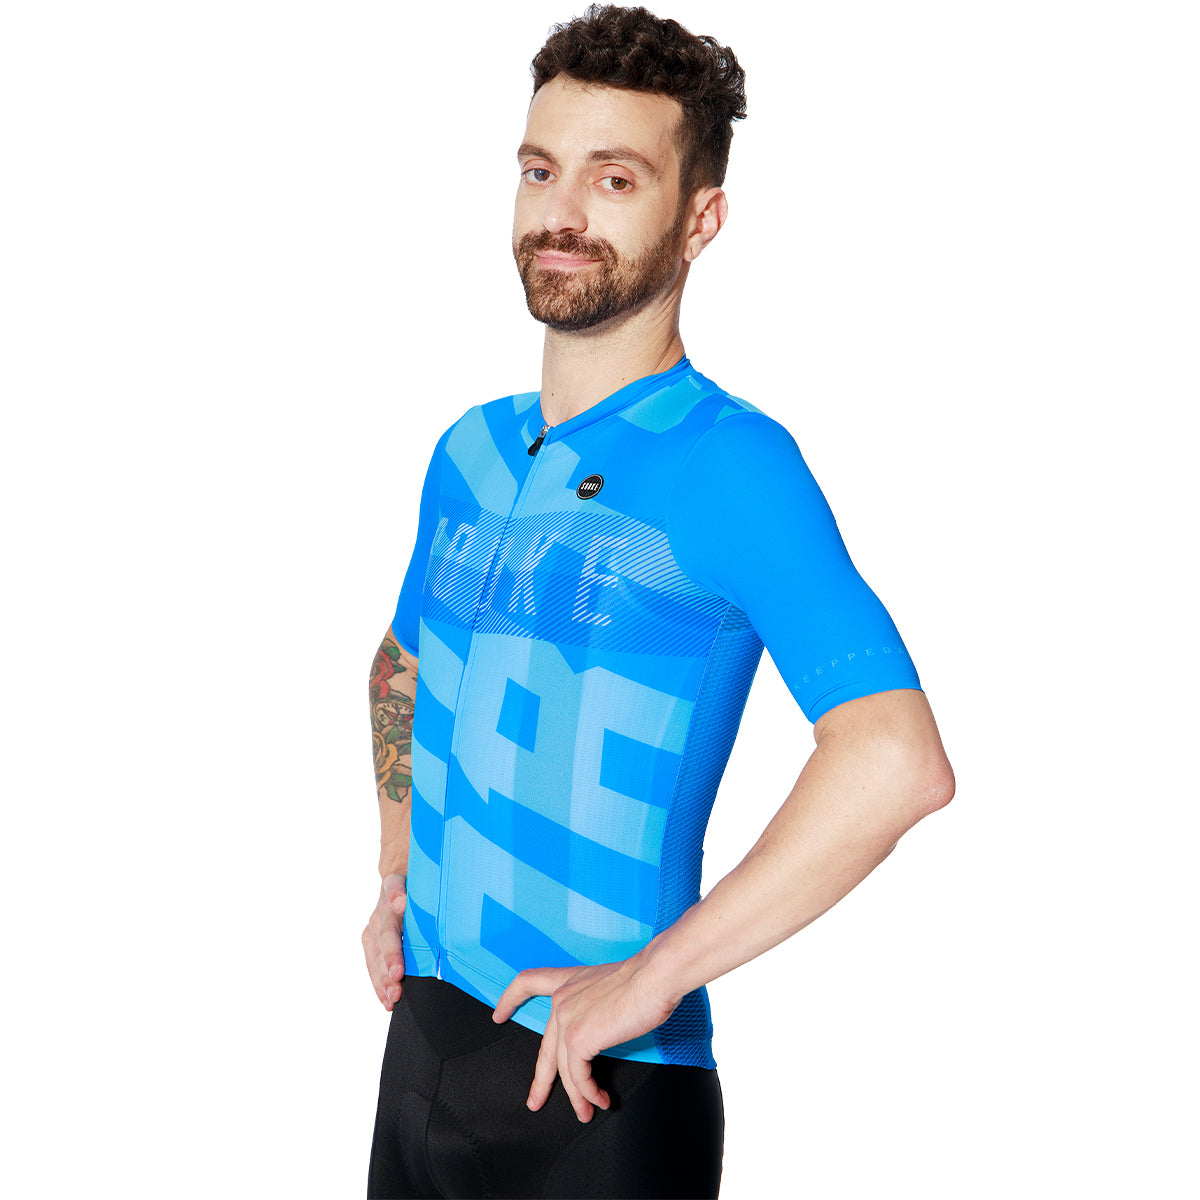 Pro Line Cycling Jersey Unisex CS1122-Blue (6692244586609)